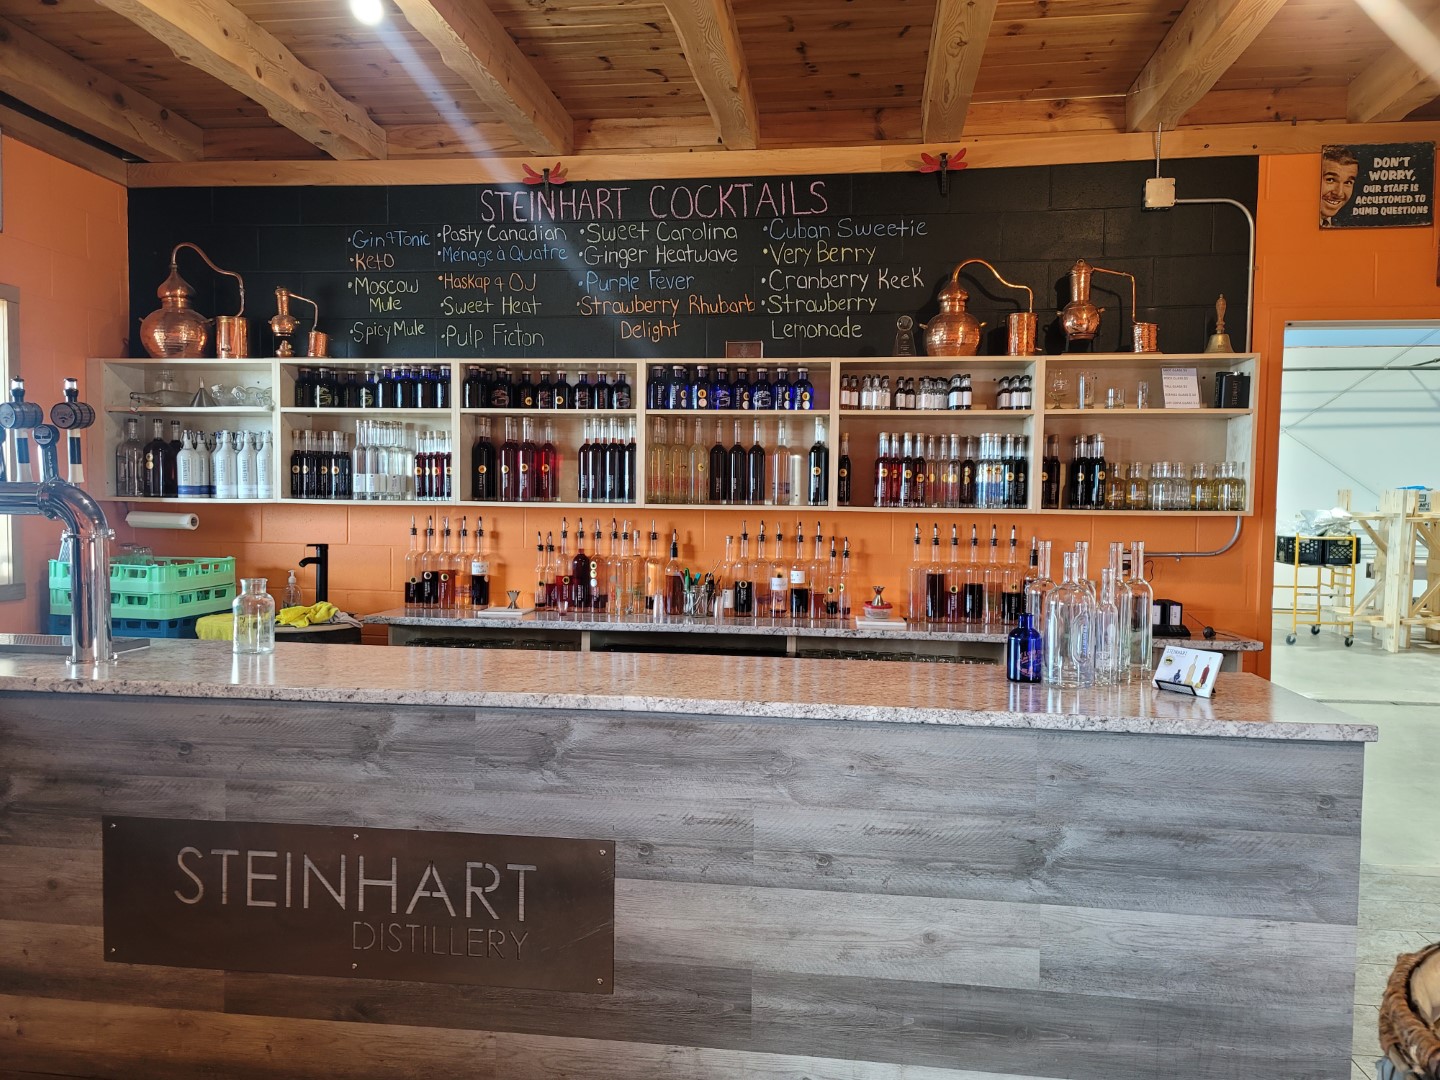 Steinhart Distillery inside